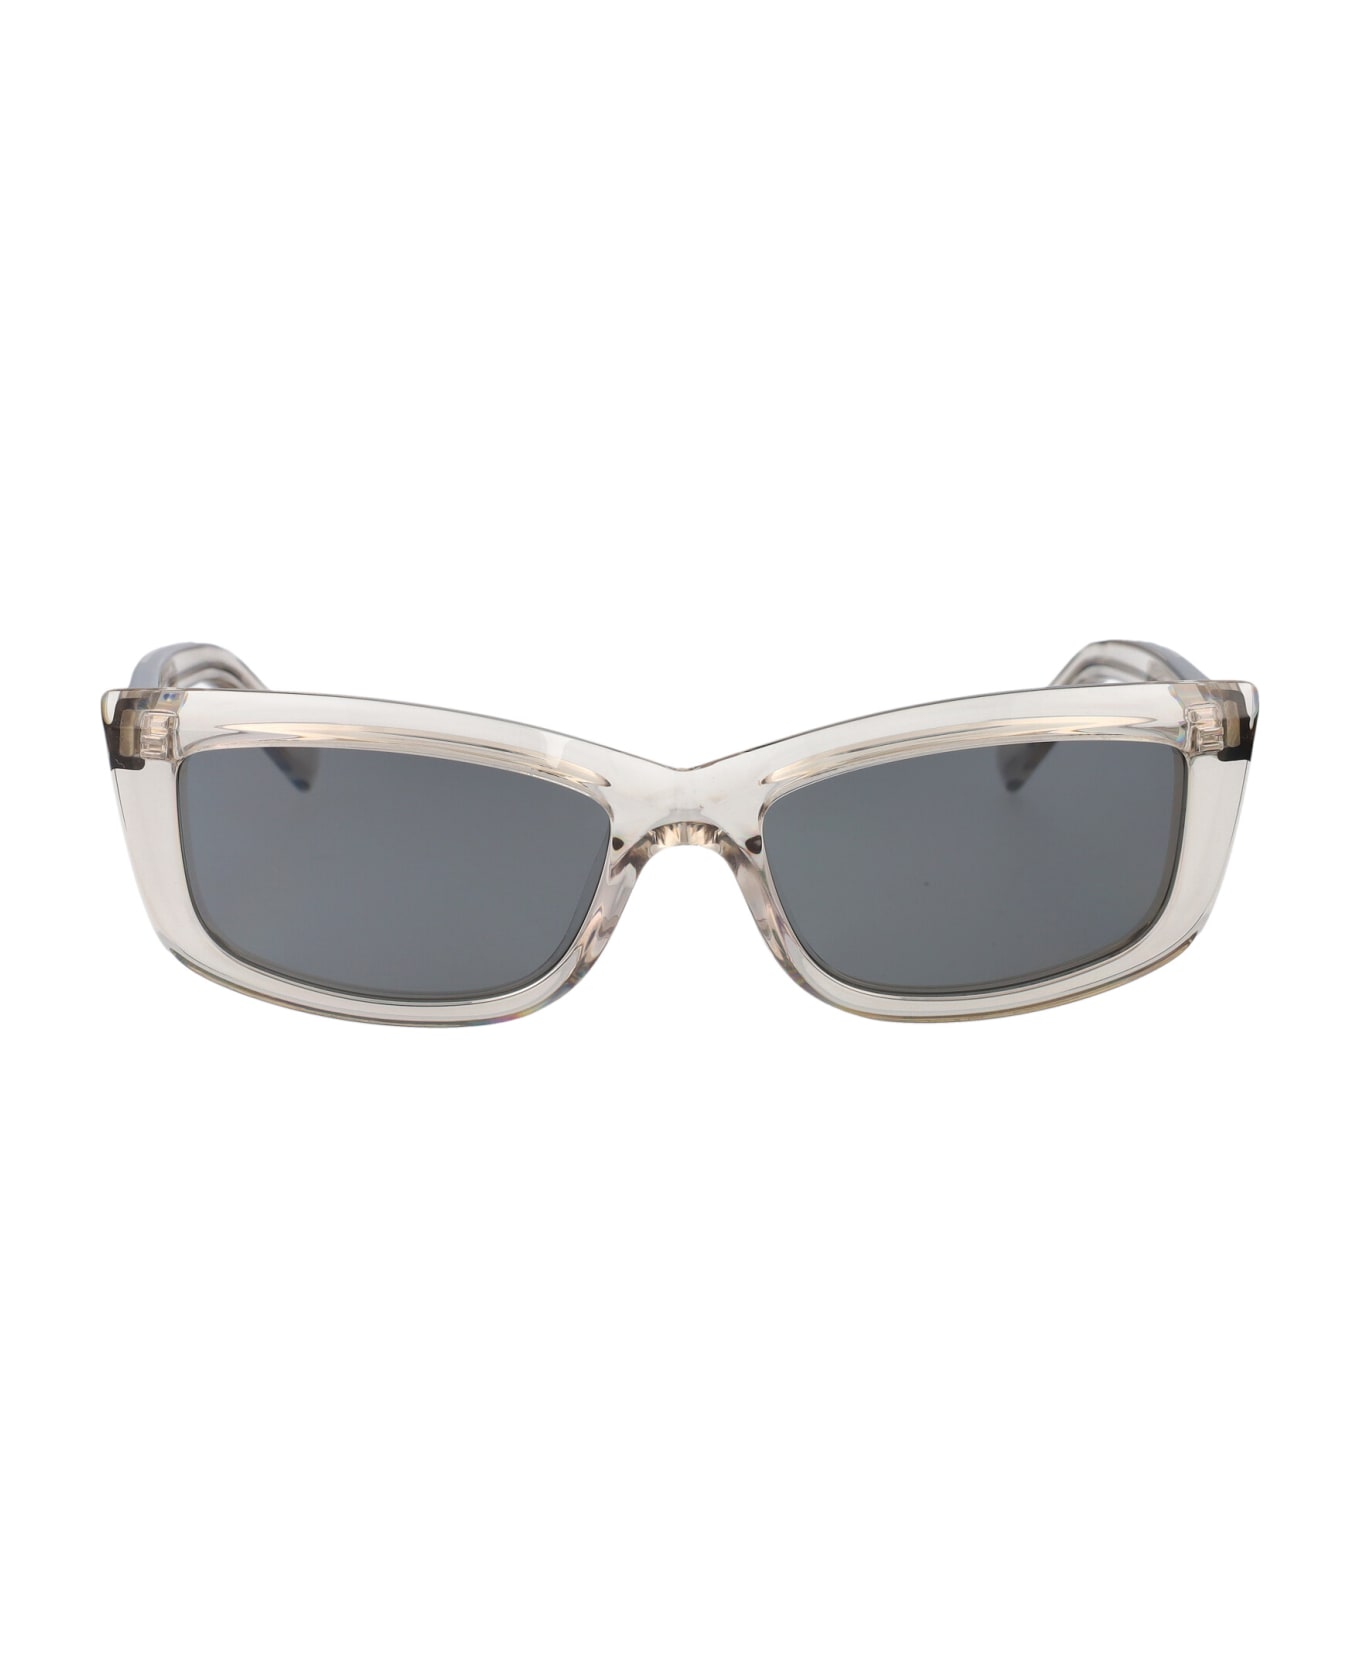 Saint Laurent Eyewear Sl 658 Sunglasses - 003 BEIGE BEIGE SILVER